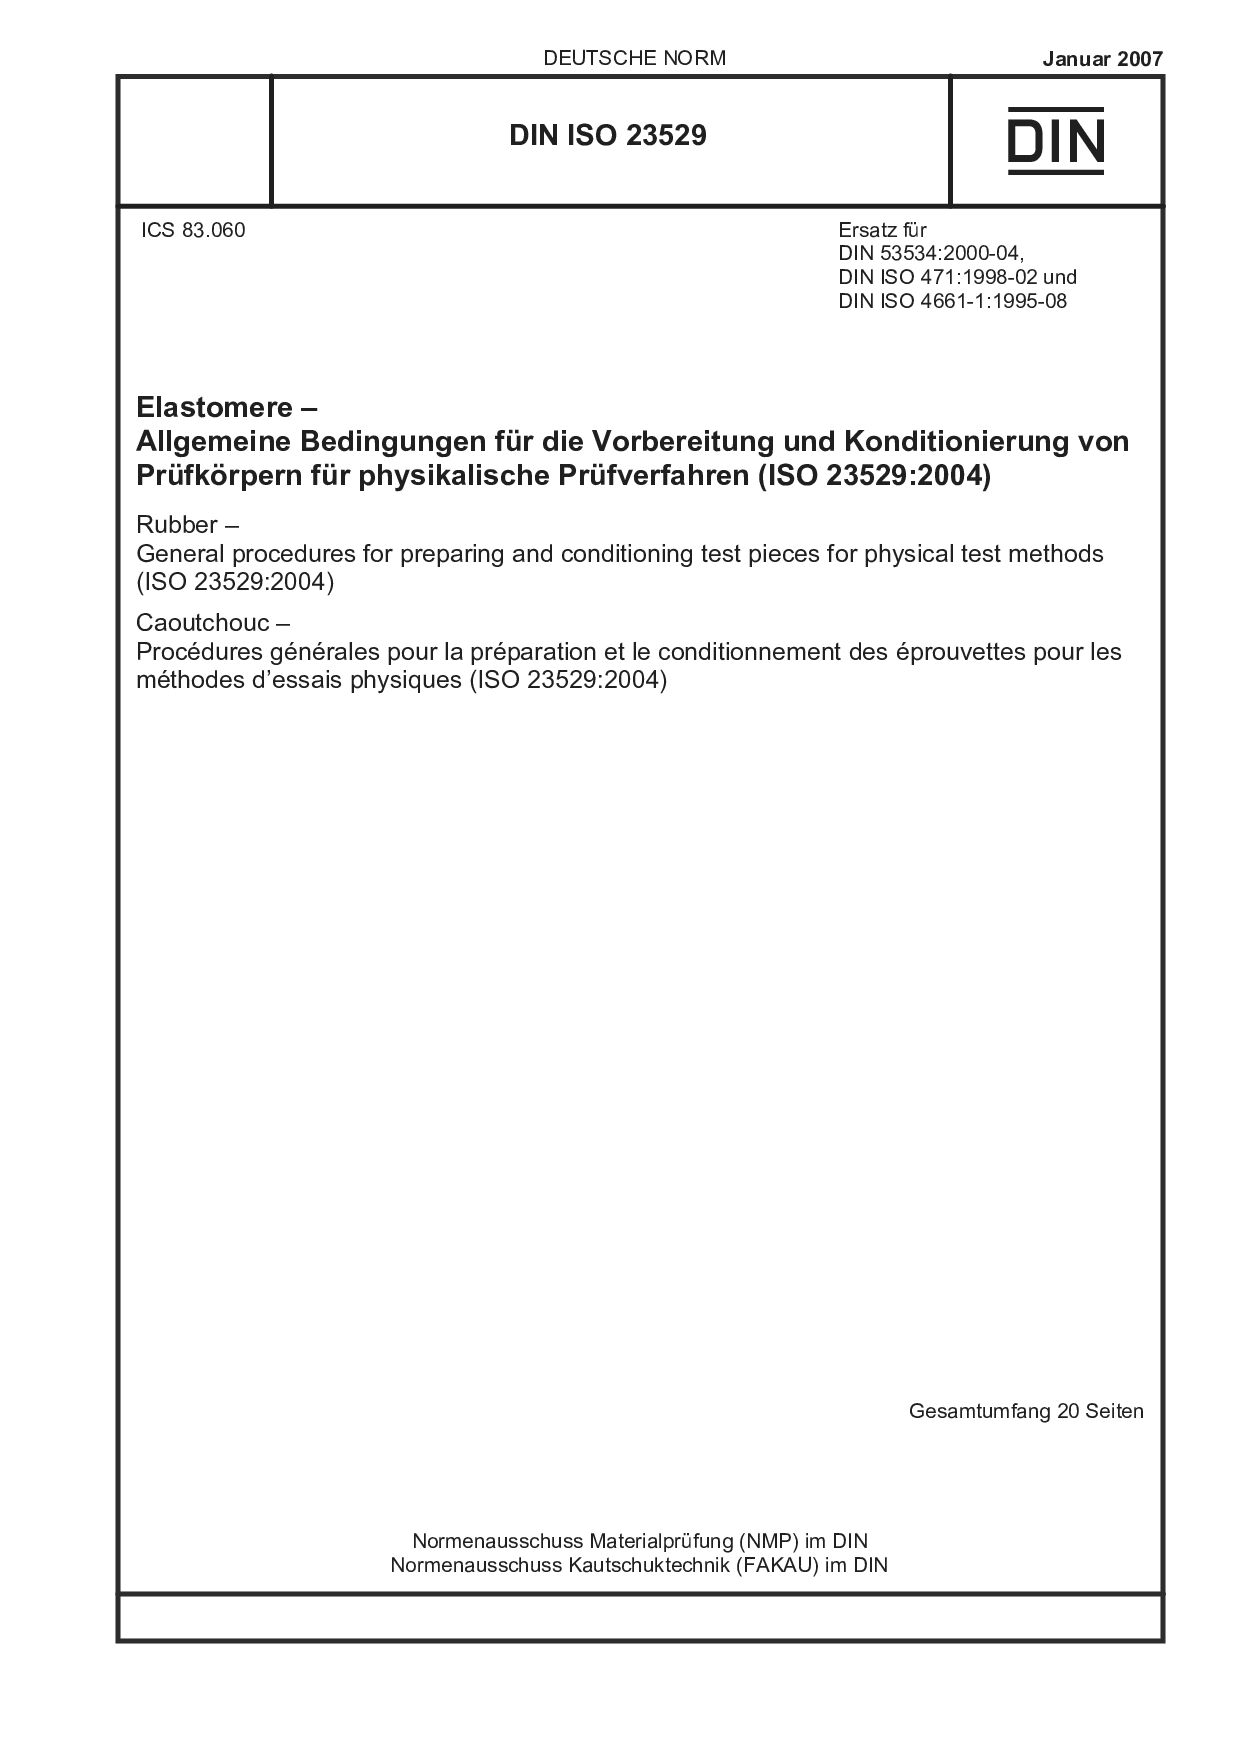 DIN ISO 23529:2007